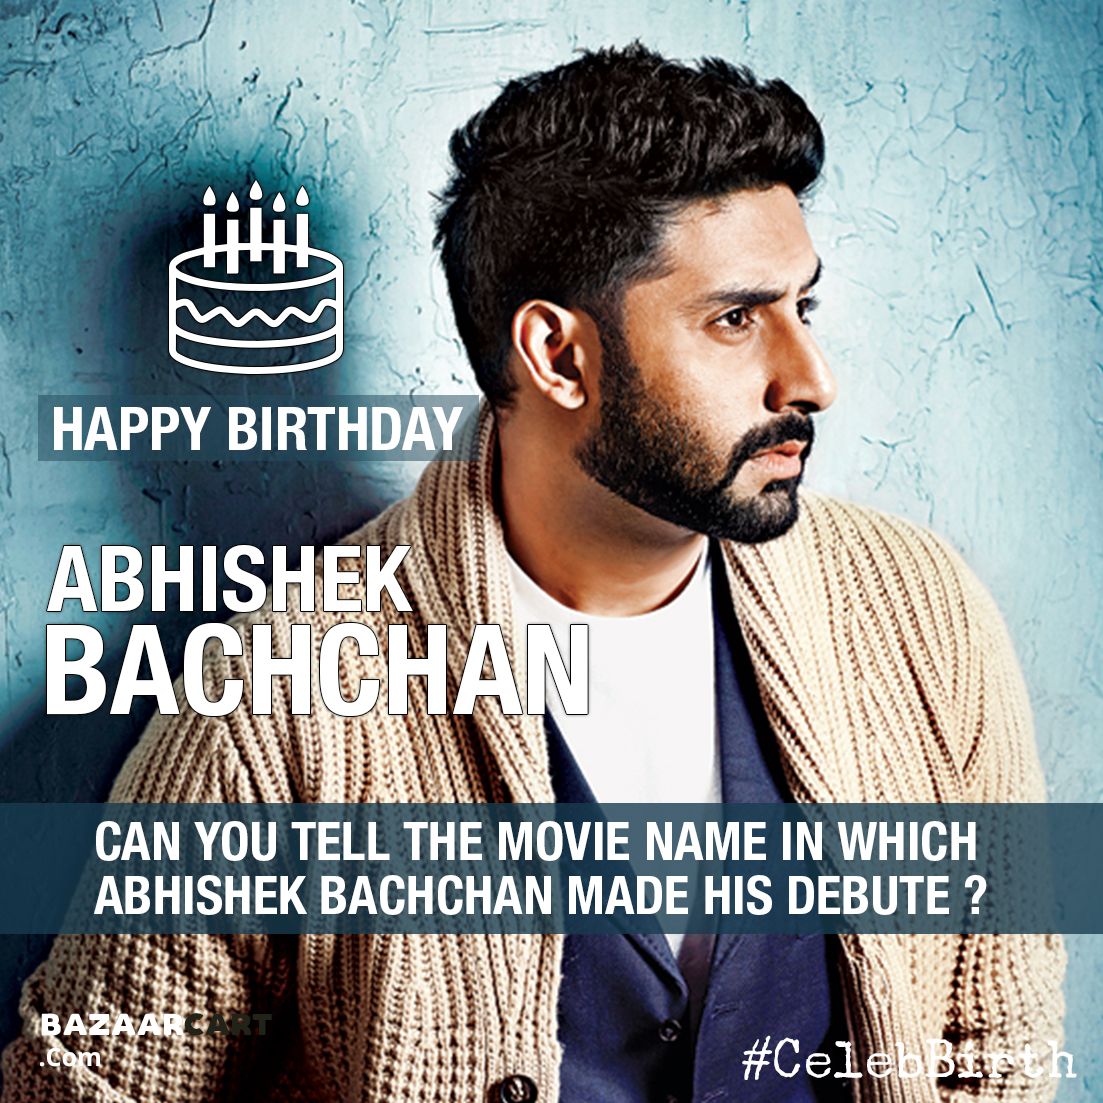 Happy Birthday Abhishek Bachchan
Can You Name His Debut Movie Name ?  